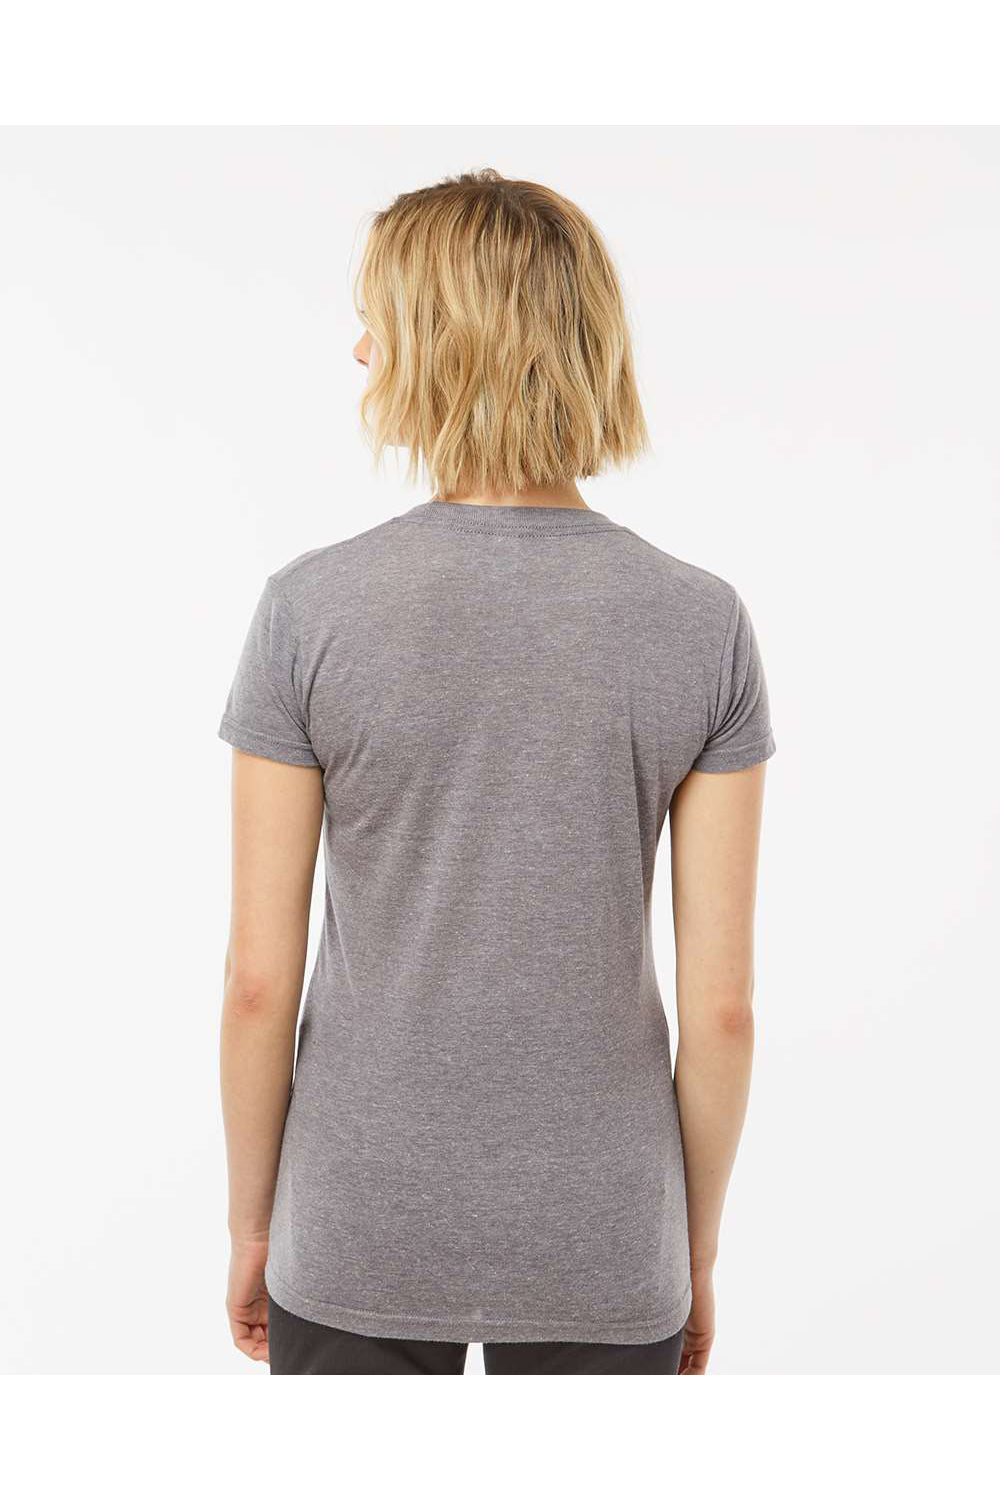 Tultex 253 Womens Short Sleeve Crewneck T-Shirt Heather Grey Model Back